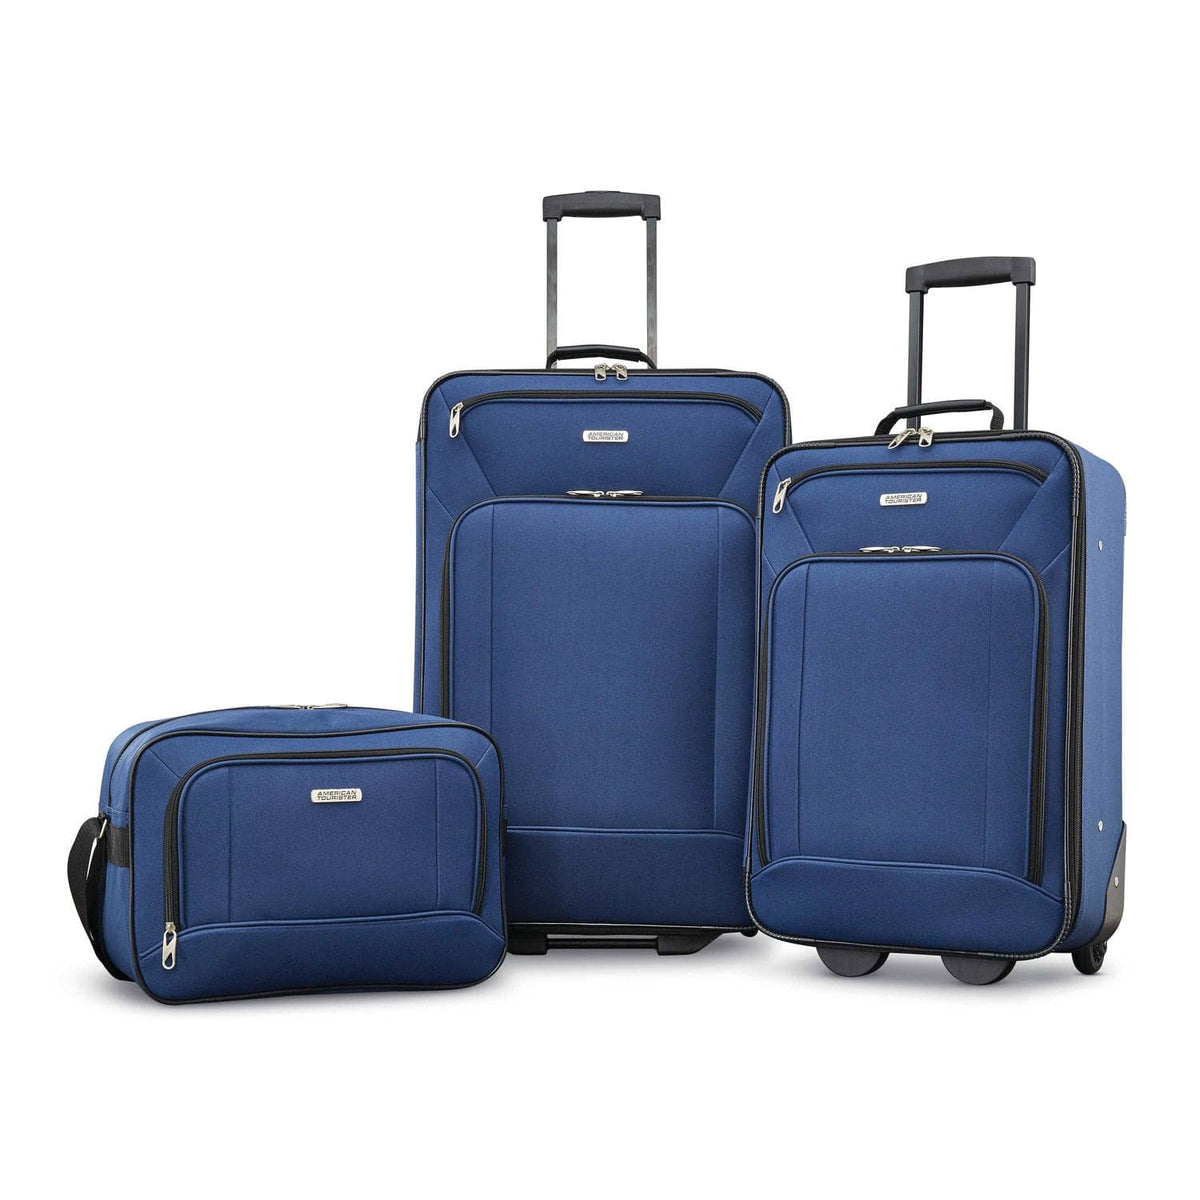 American Tourister Fieldbrook Xlt 3Pc Upright Luggage Set